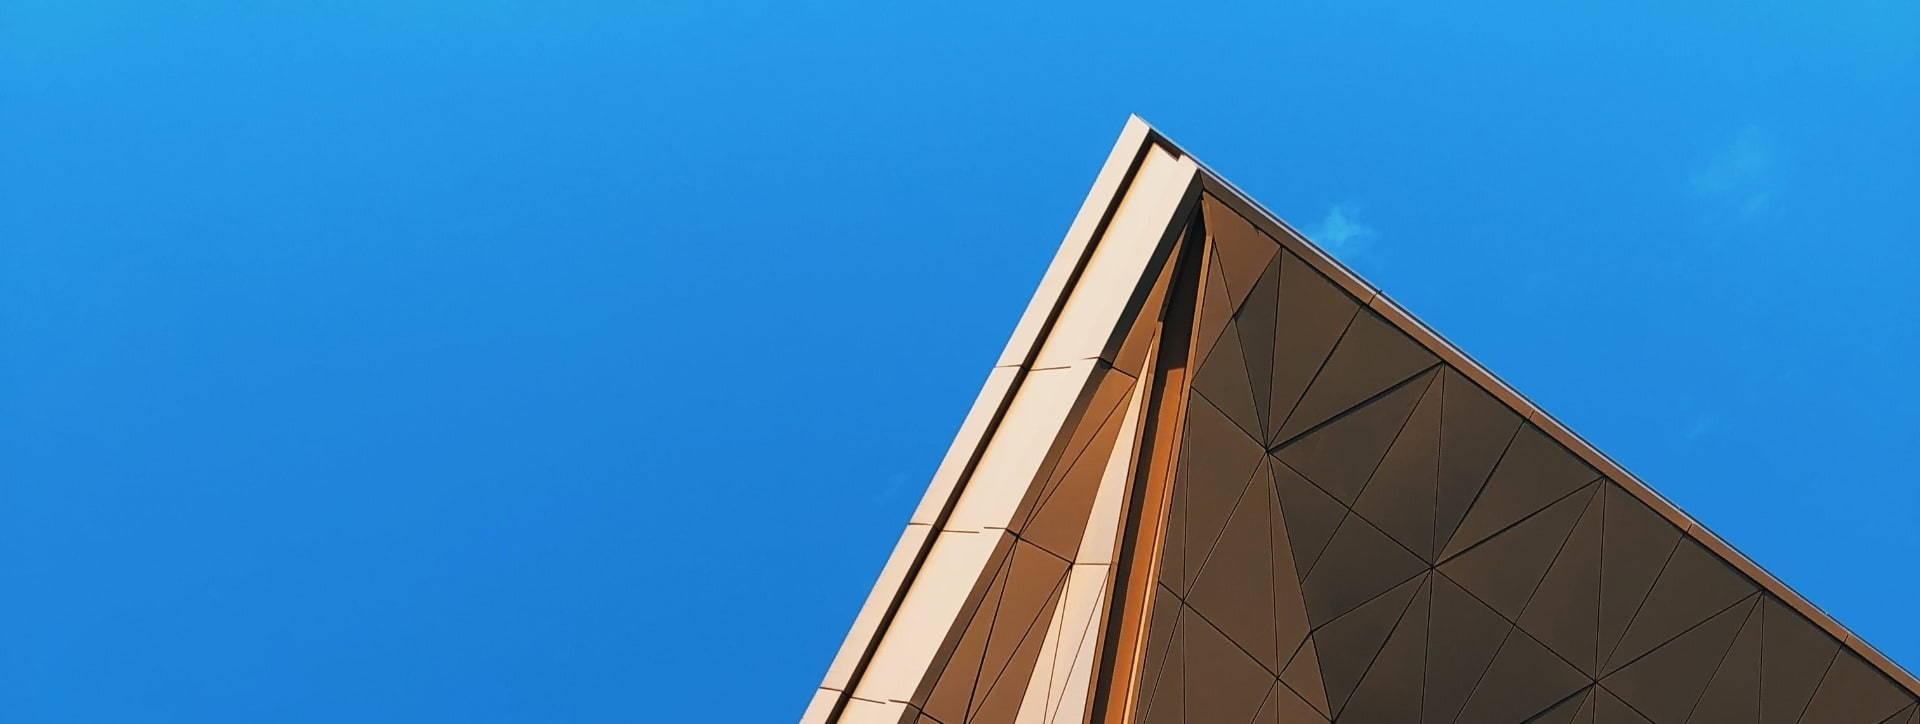 Building and a blue sky